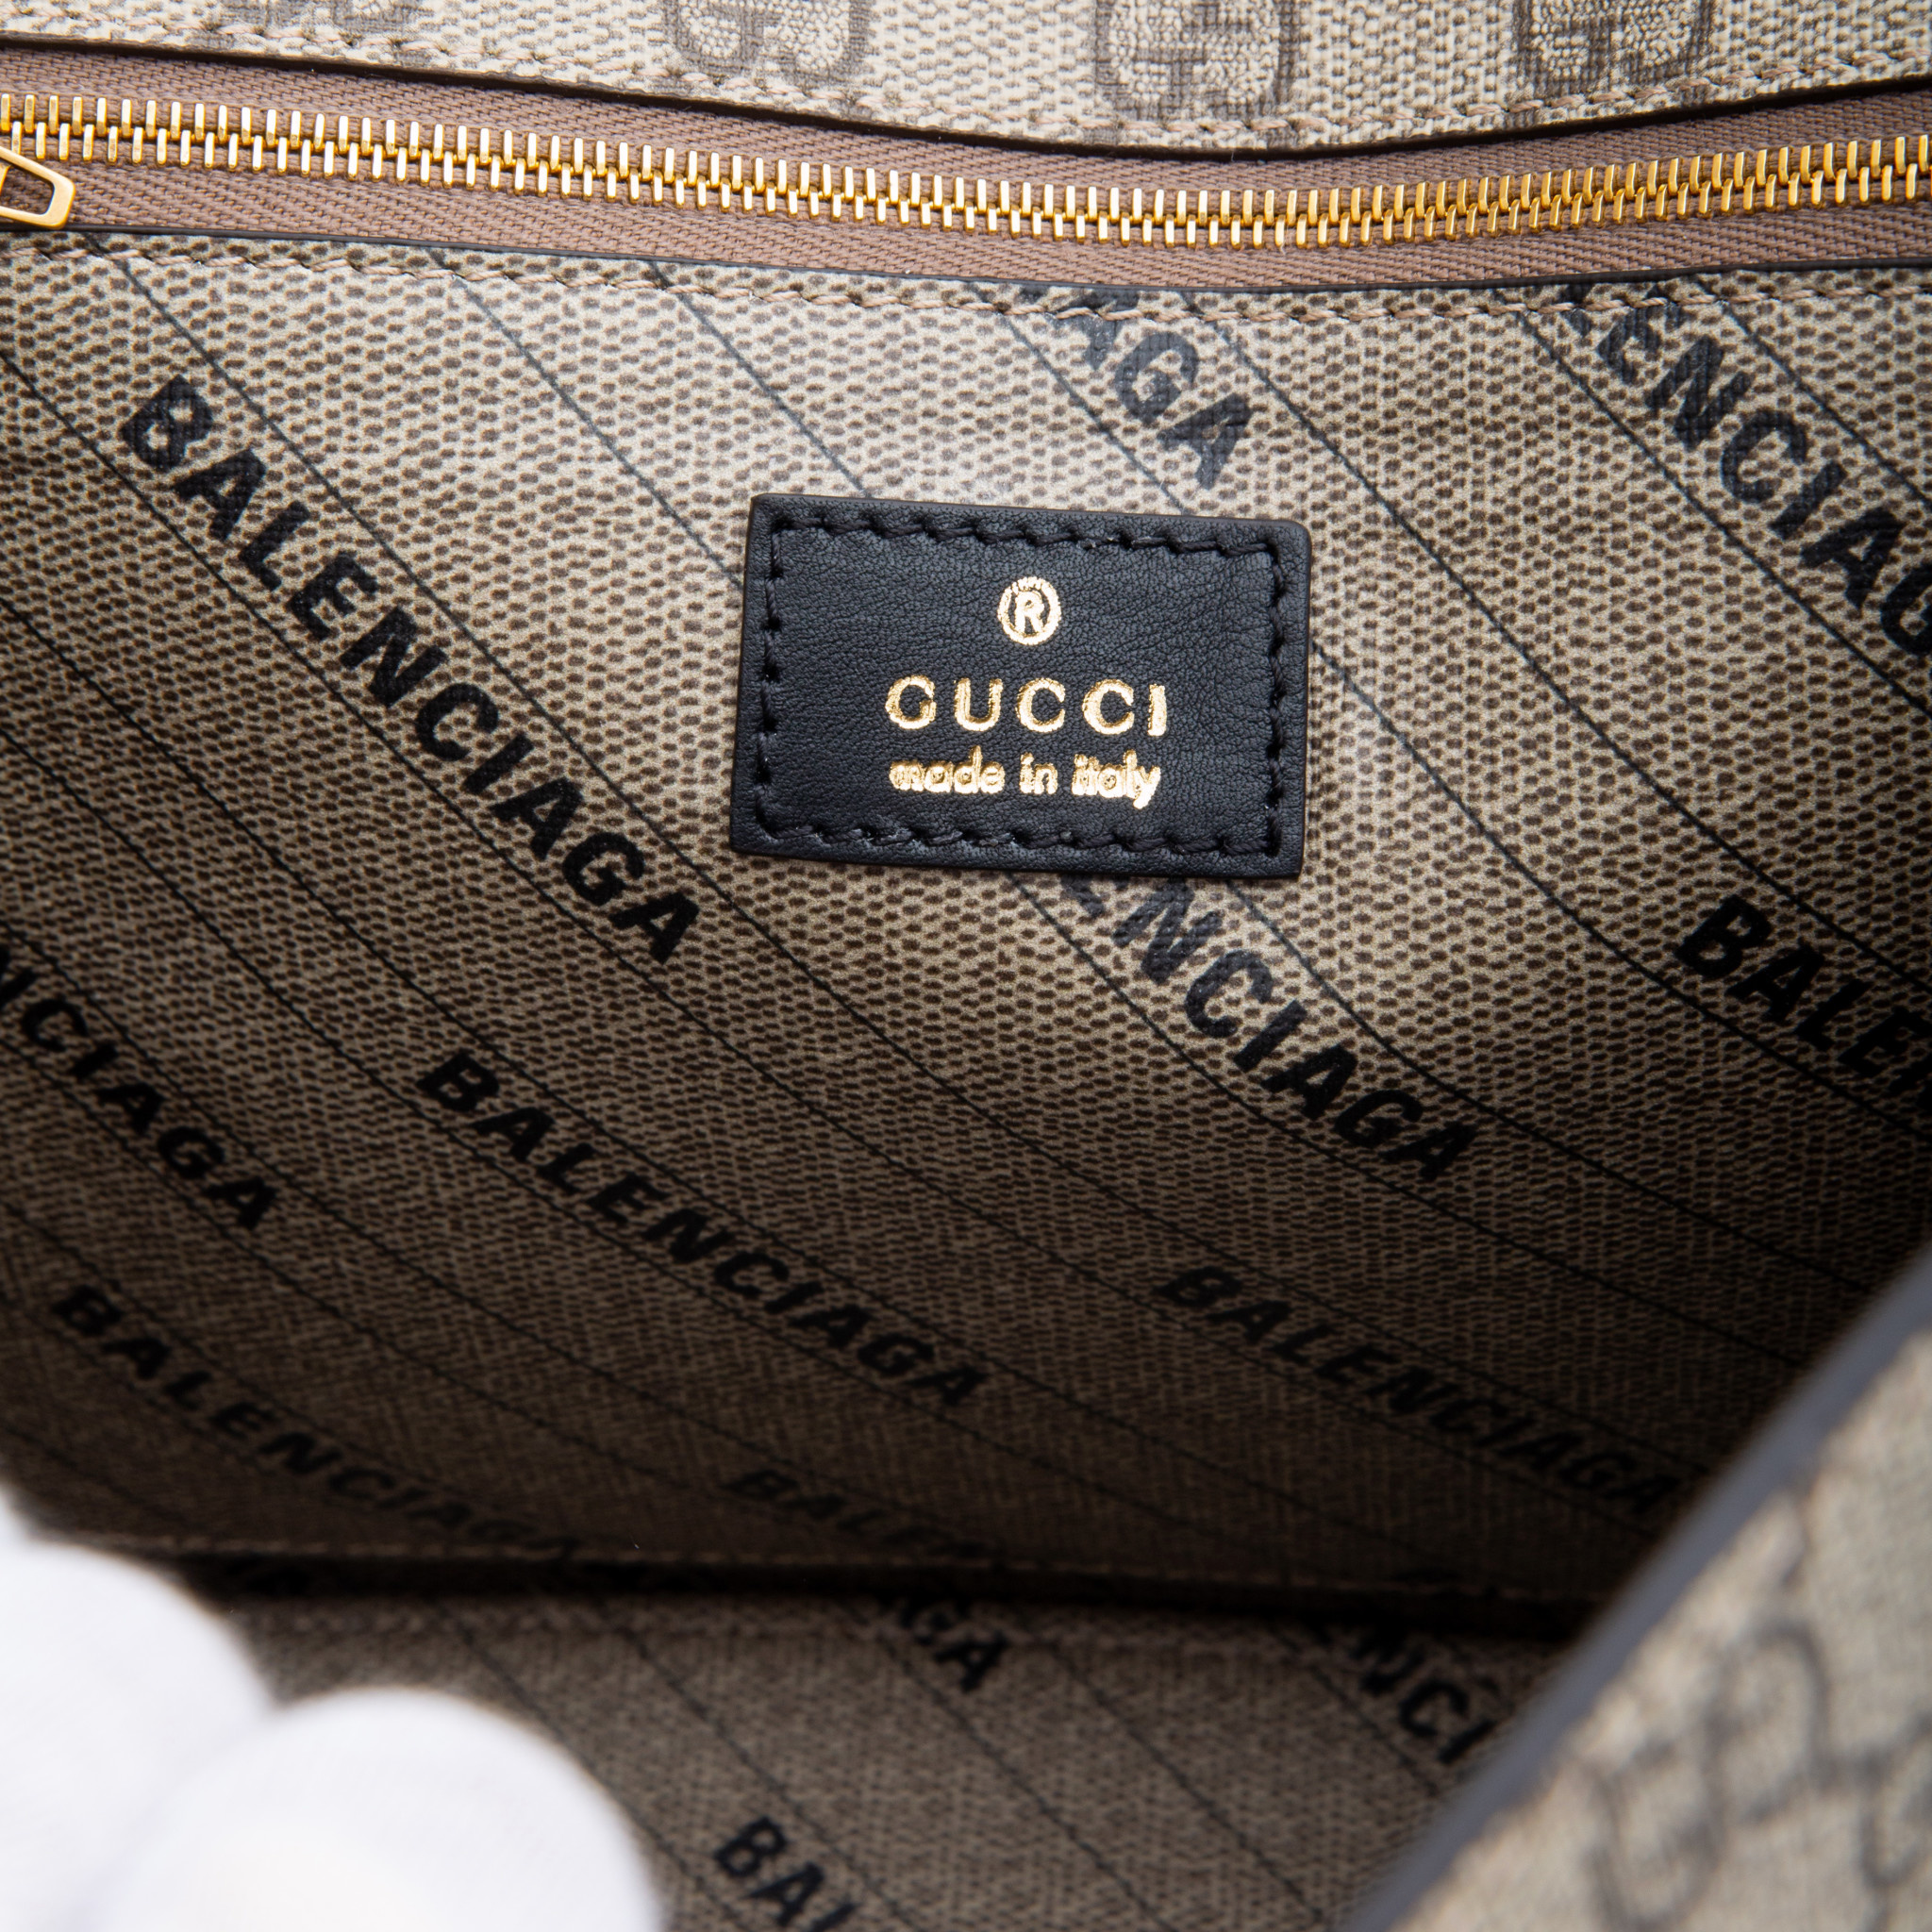 The Hacker Project Gucci x Balenciaga Small Hourglass Bag – The